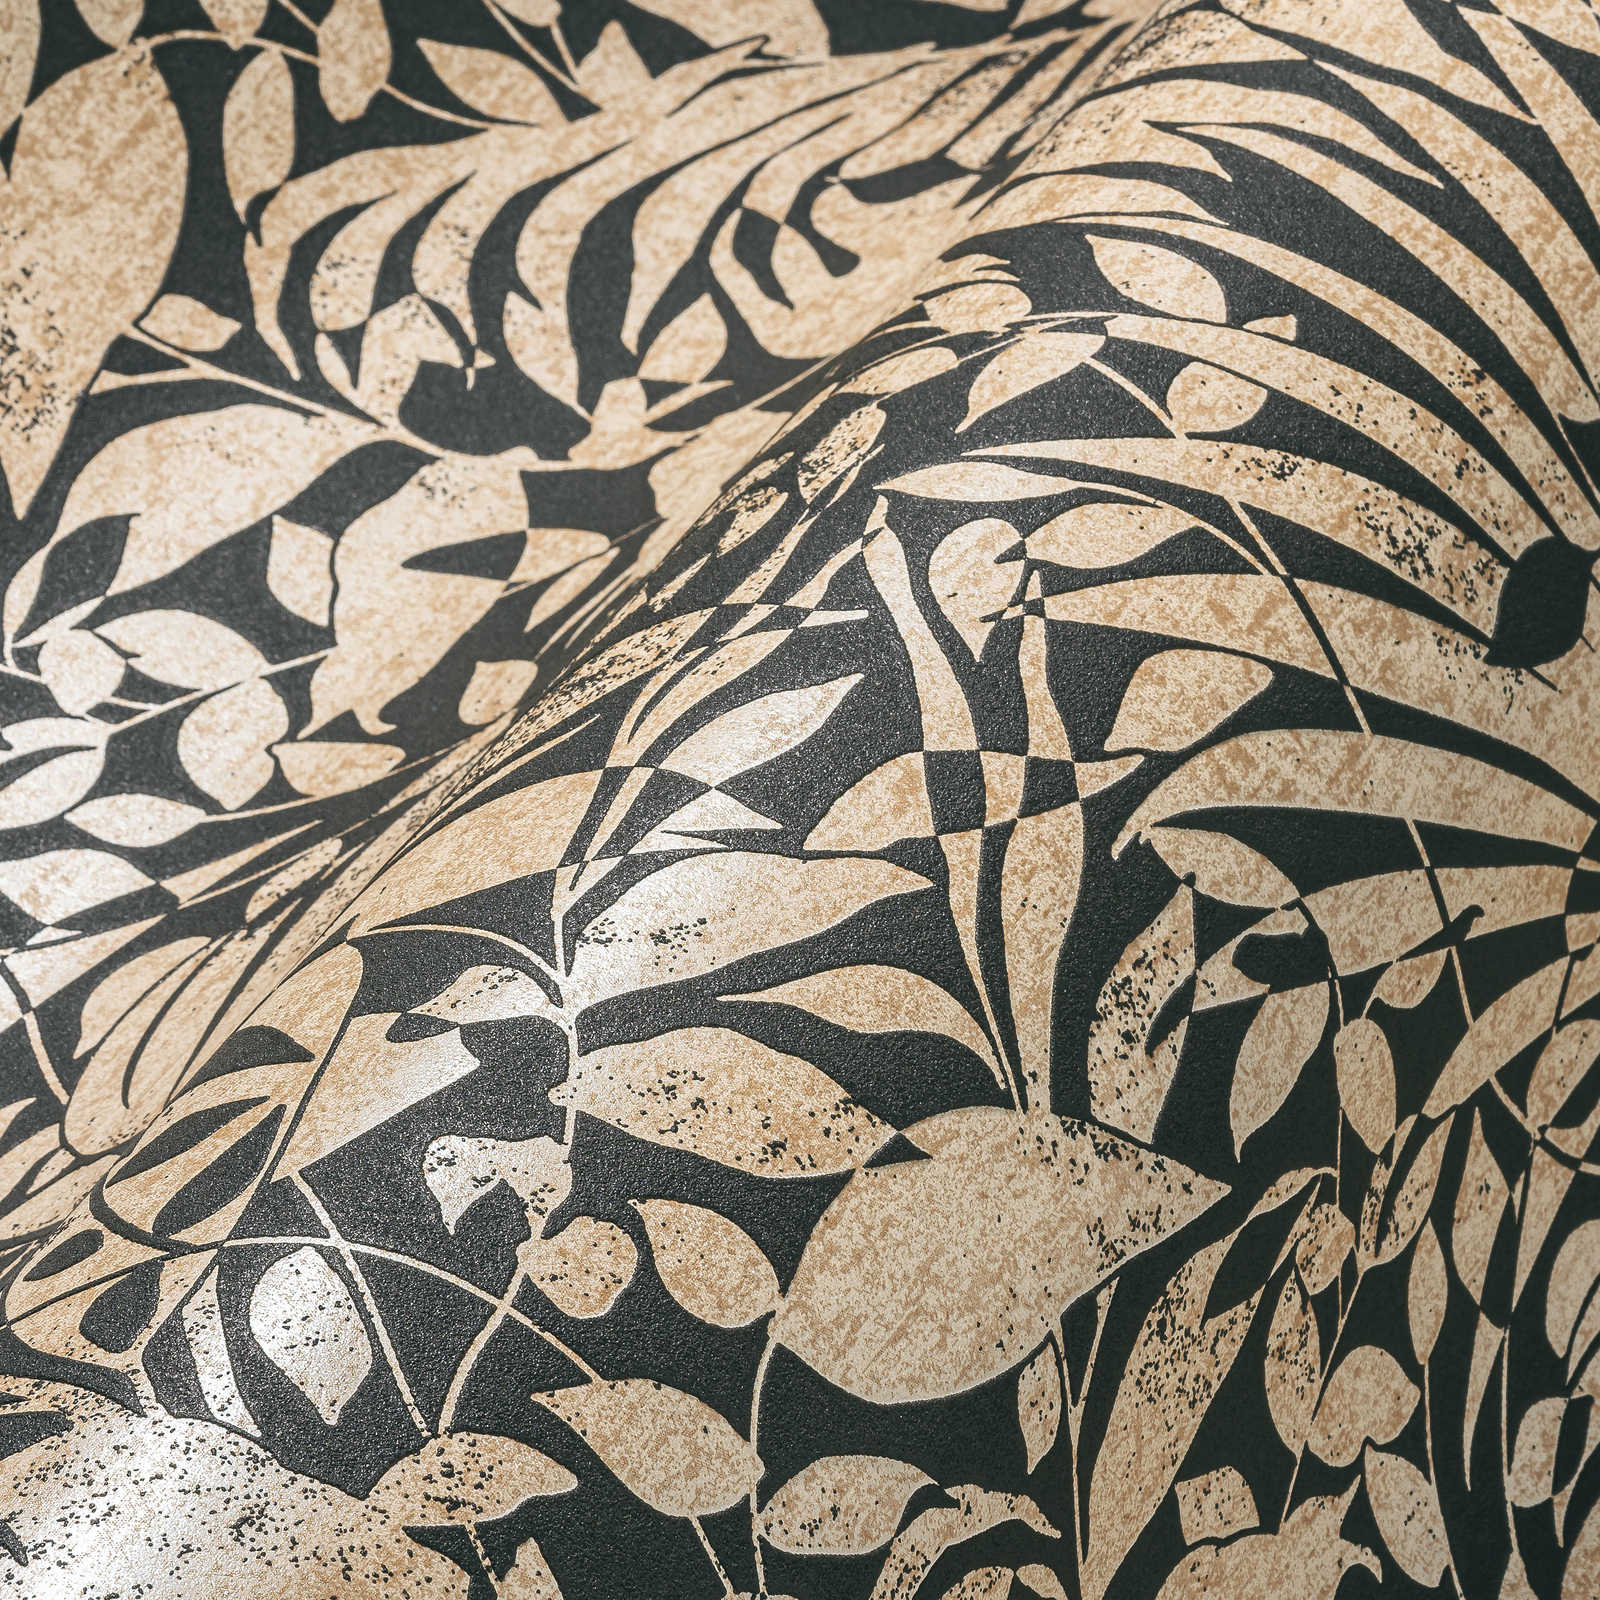             Schwarze Metallic-Tapete mit floralem Muster
        